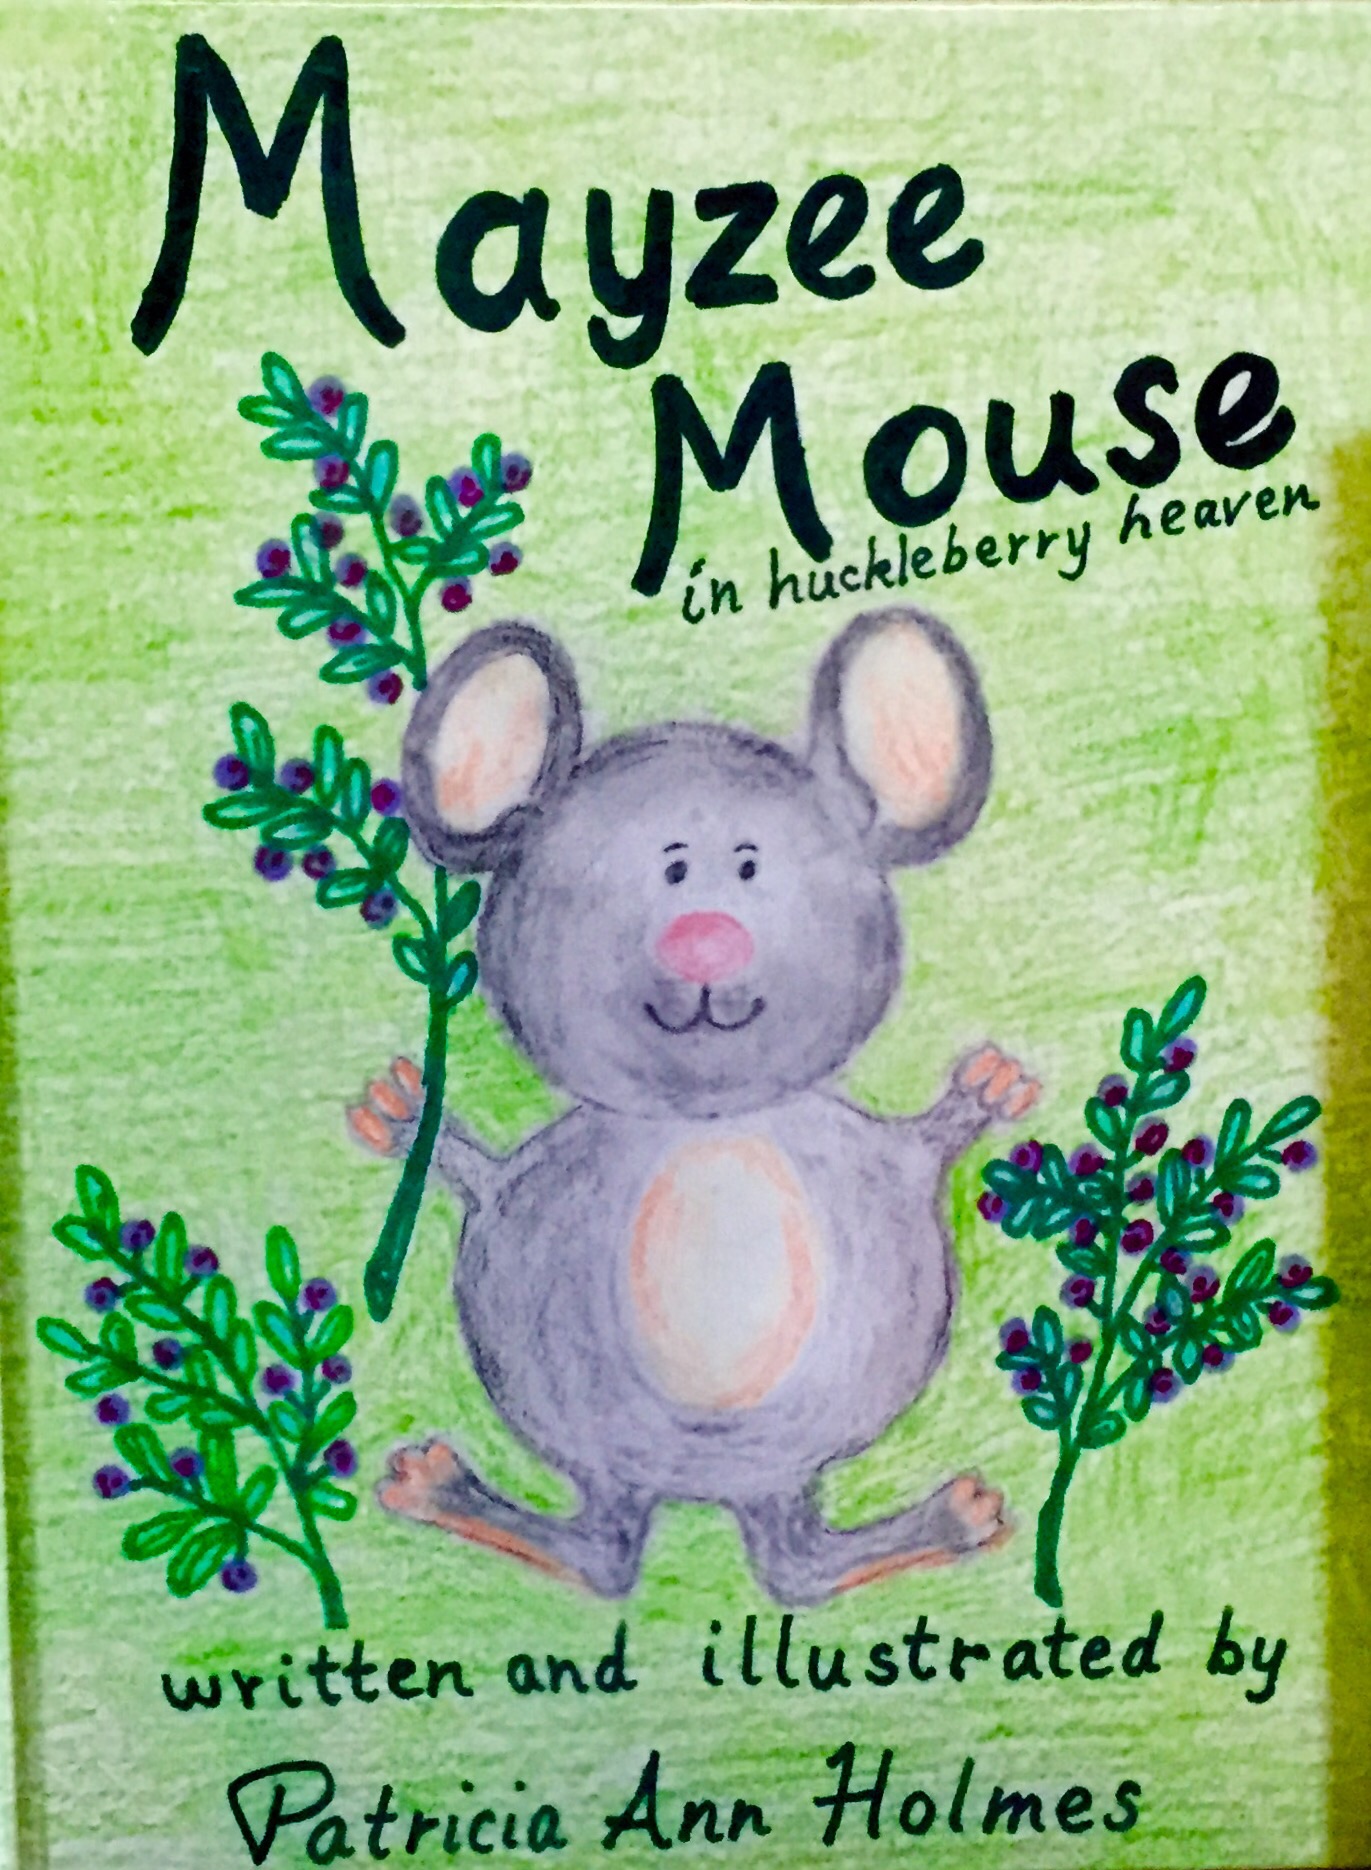 Mayzee Mouse